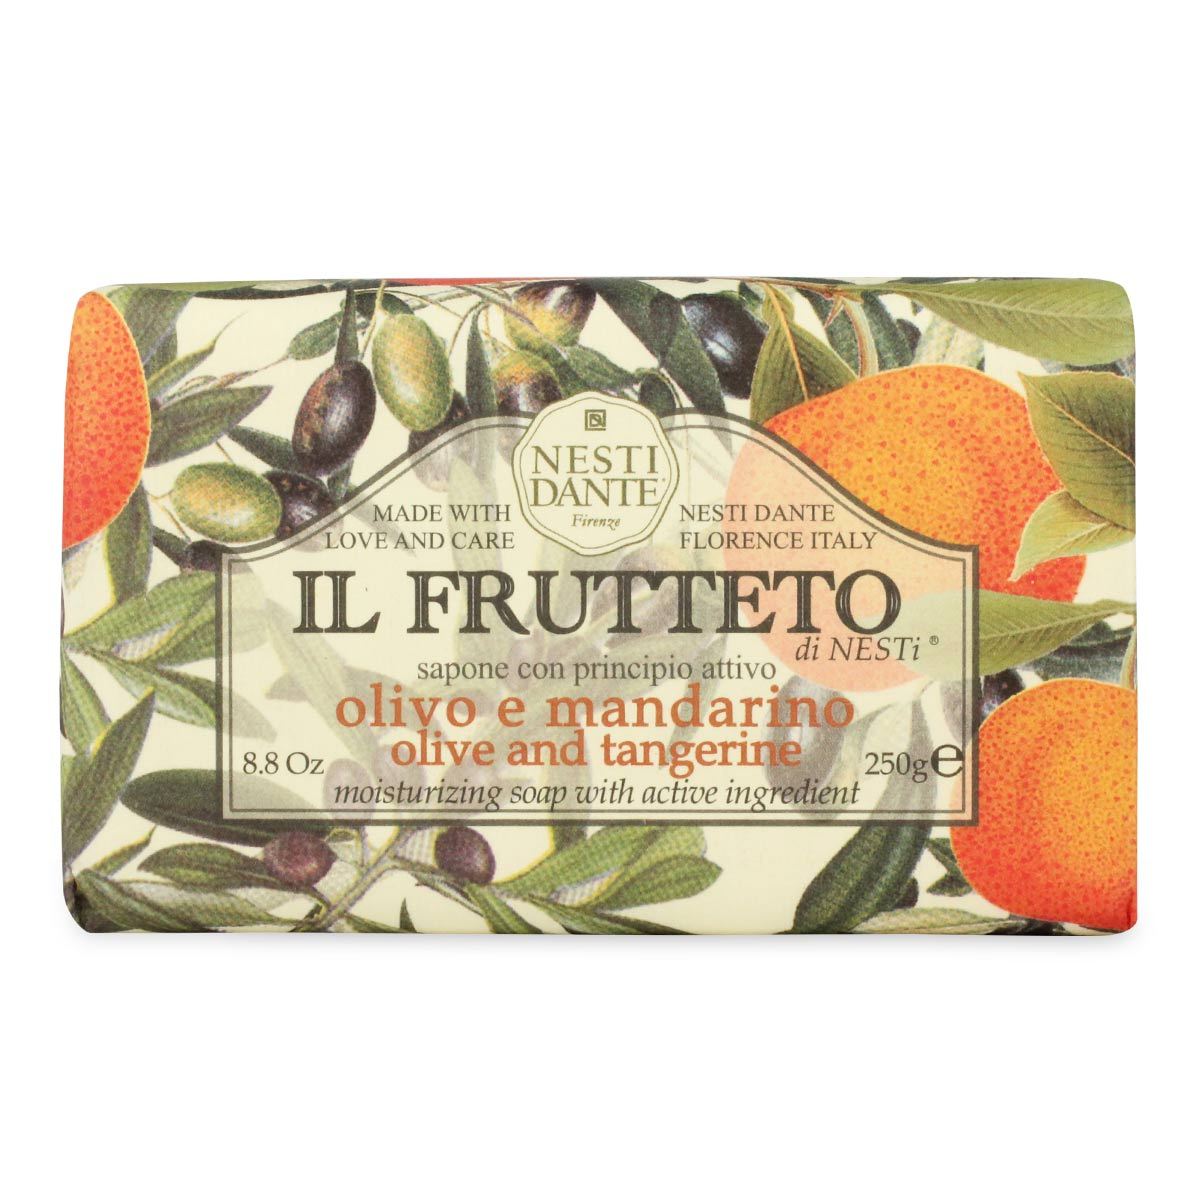 Primary image of Olive Oil & Tangerine Soap